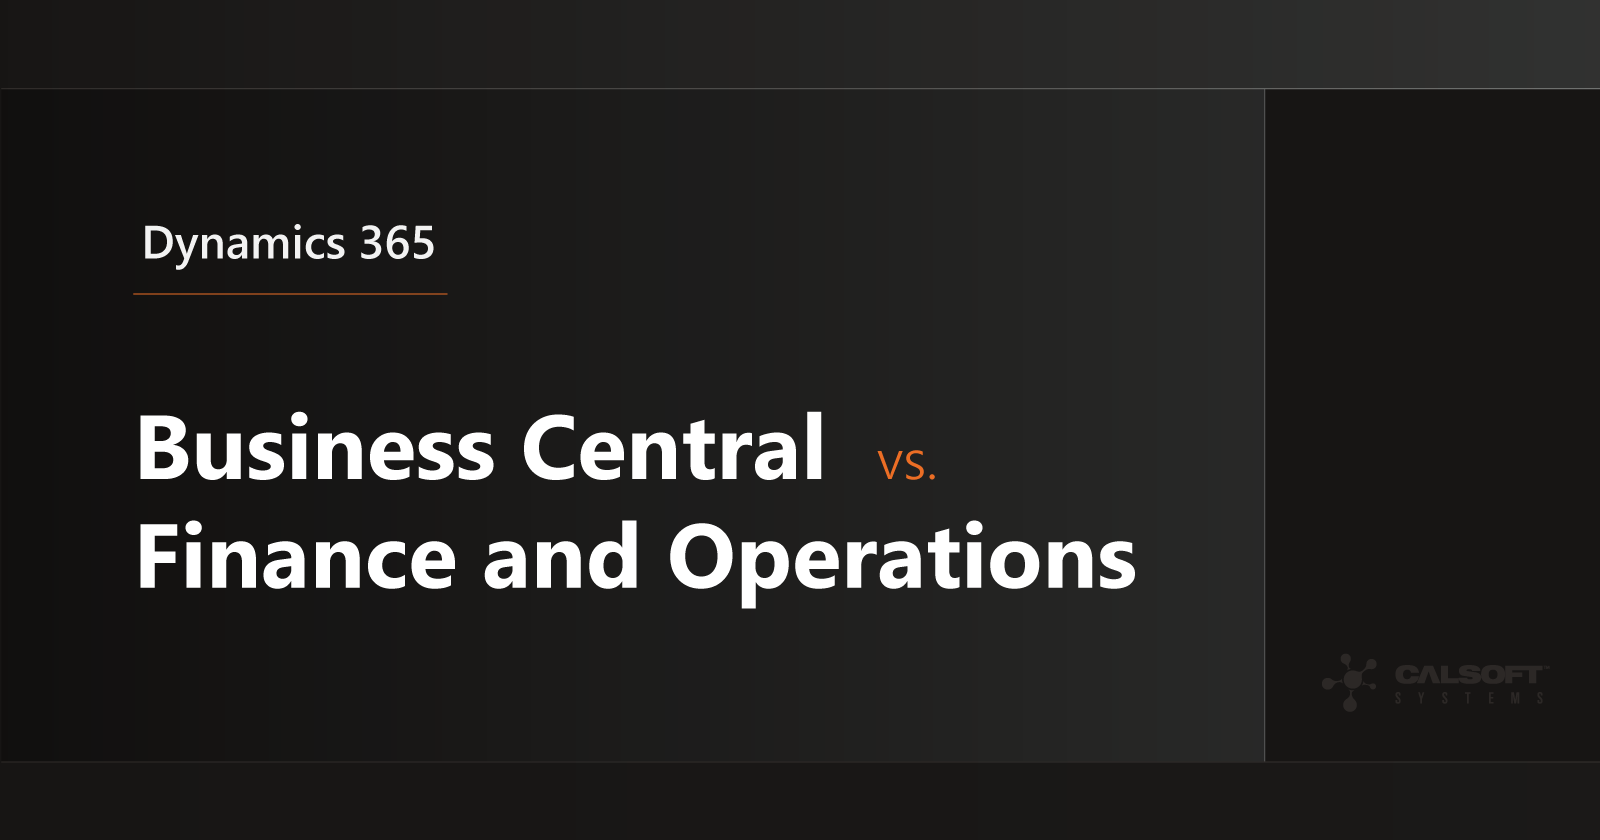 Dynamics 365 Business Central Essentials vs. Premium